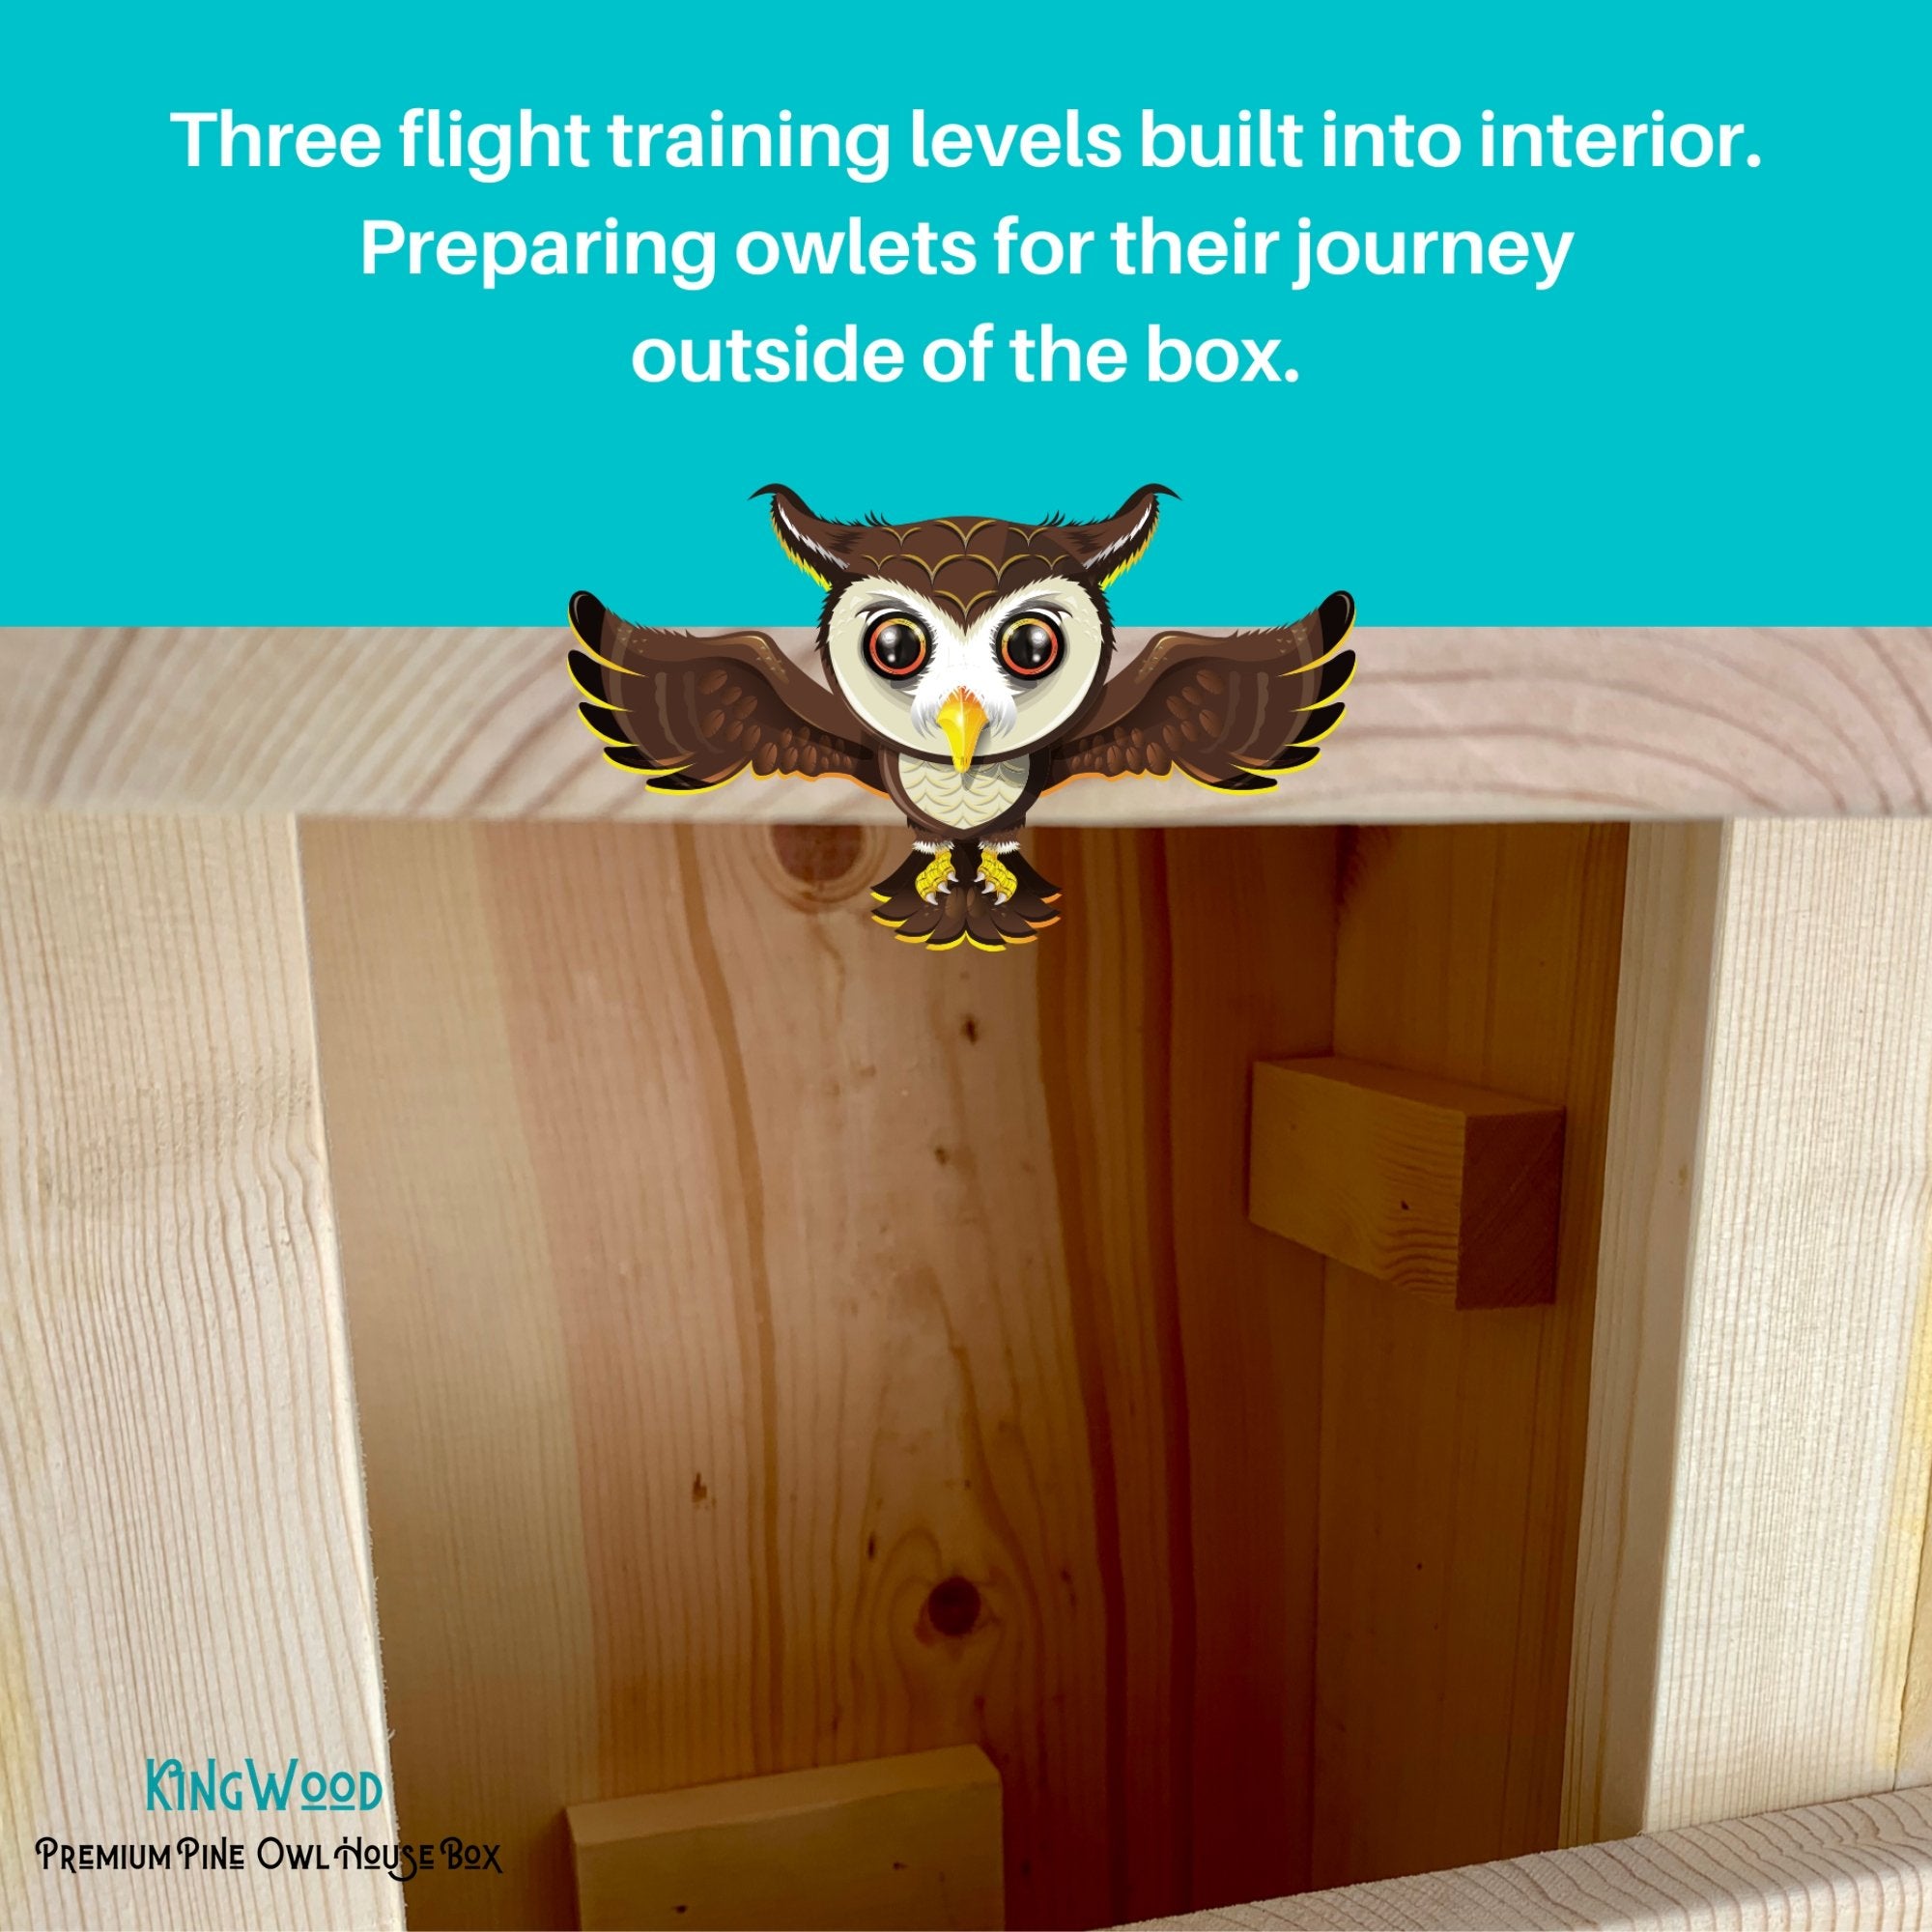 KingWood Premium Pine Owl House Box flight training levels for owlets